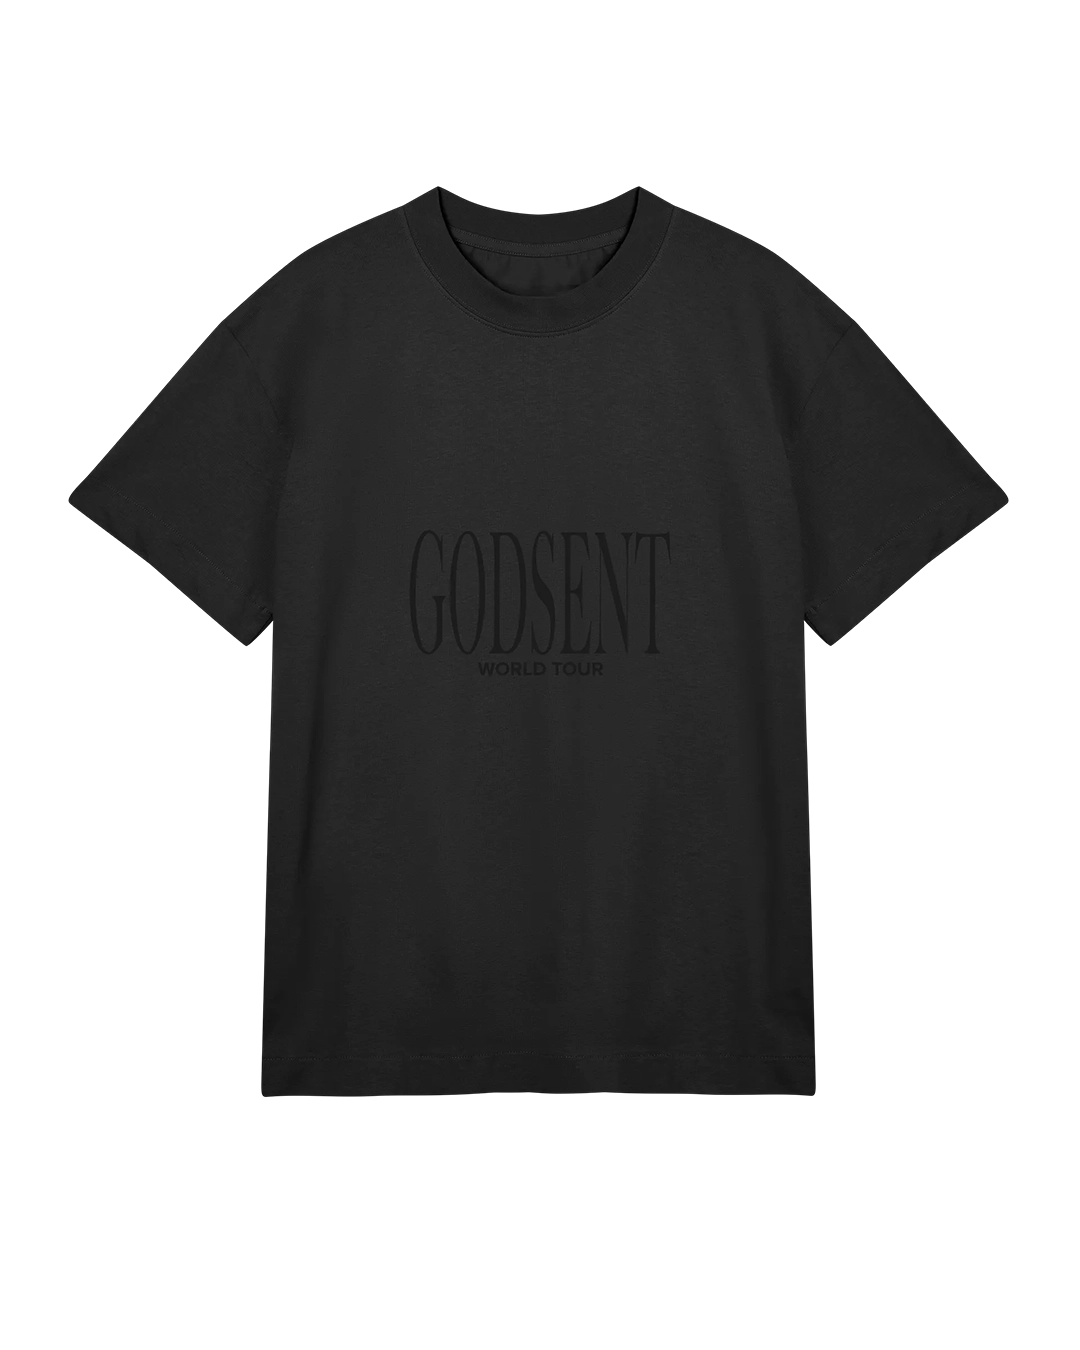 GODSENT World Tour T-Shirt Front